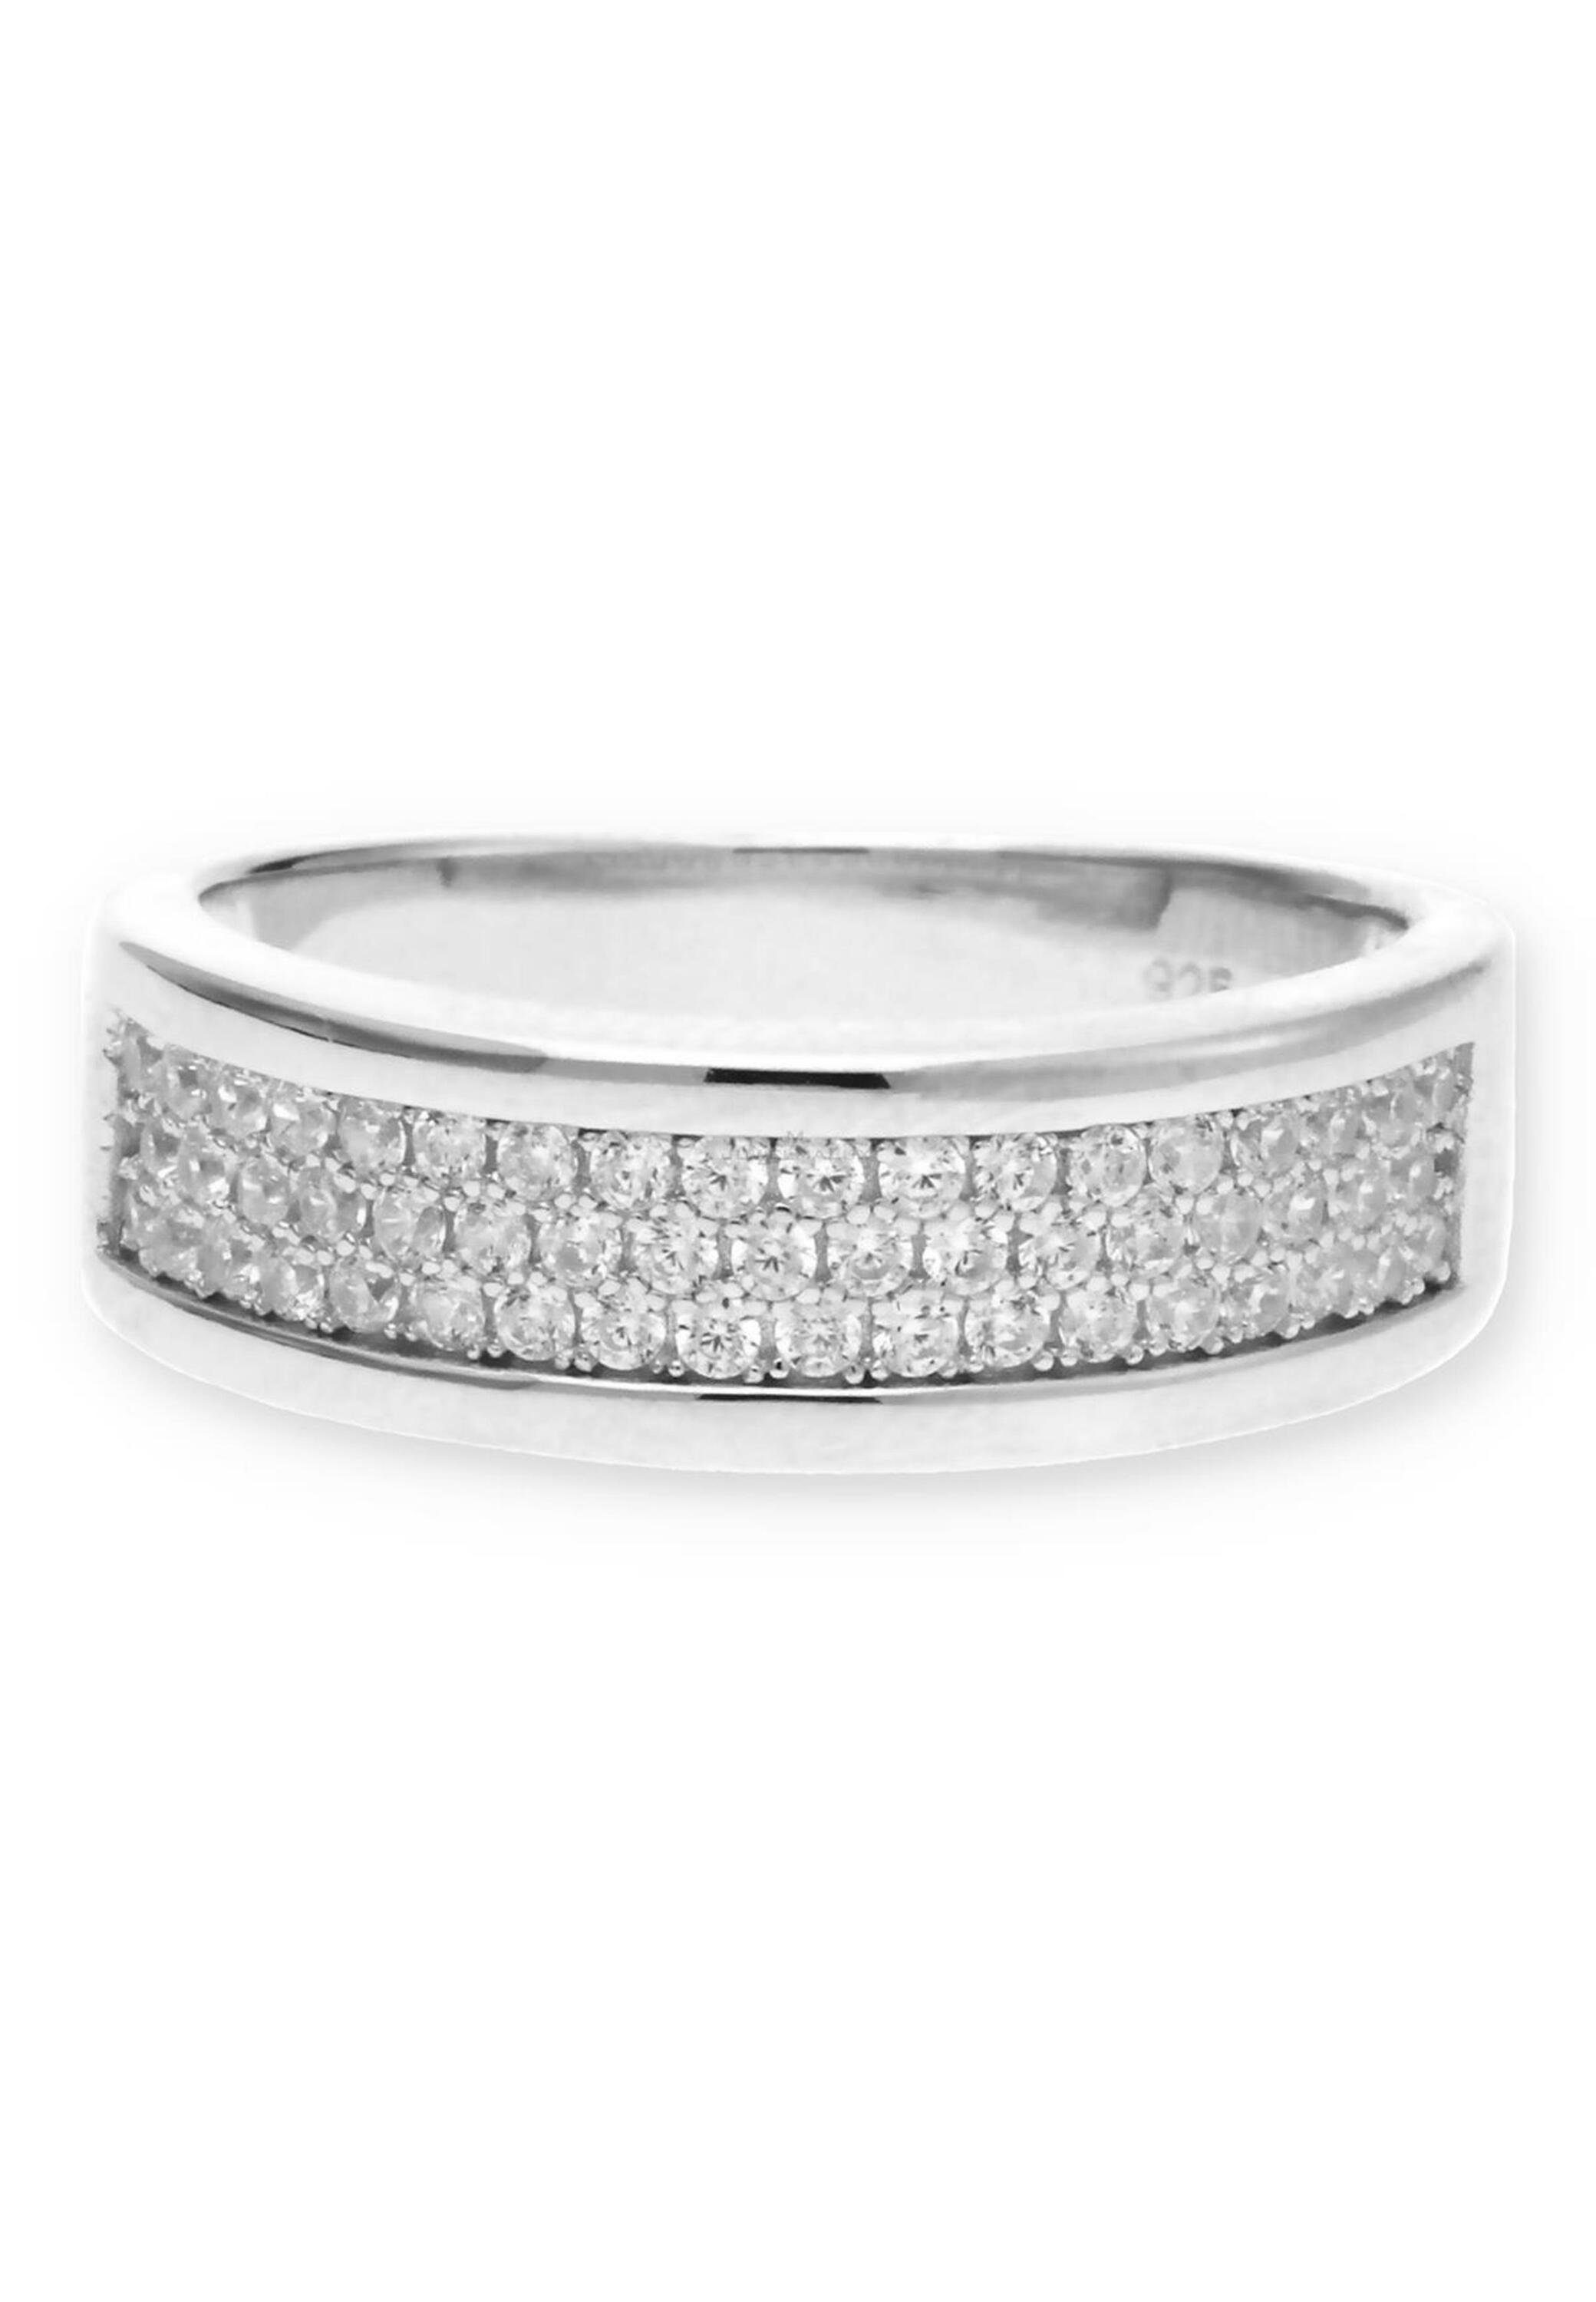 JuwelmaLux Silberring Ring mit 925/000 synth Sterling Silber Zirkonia